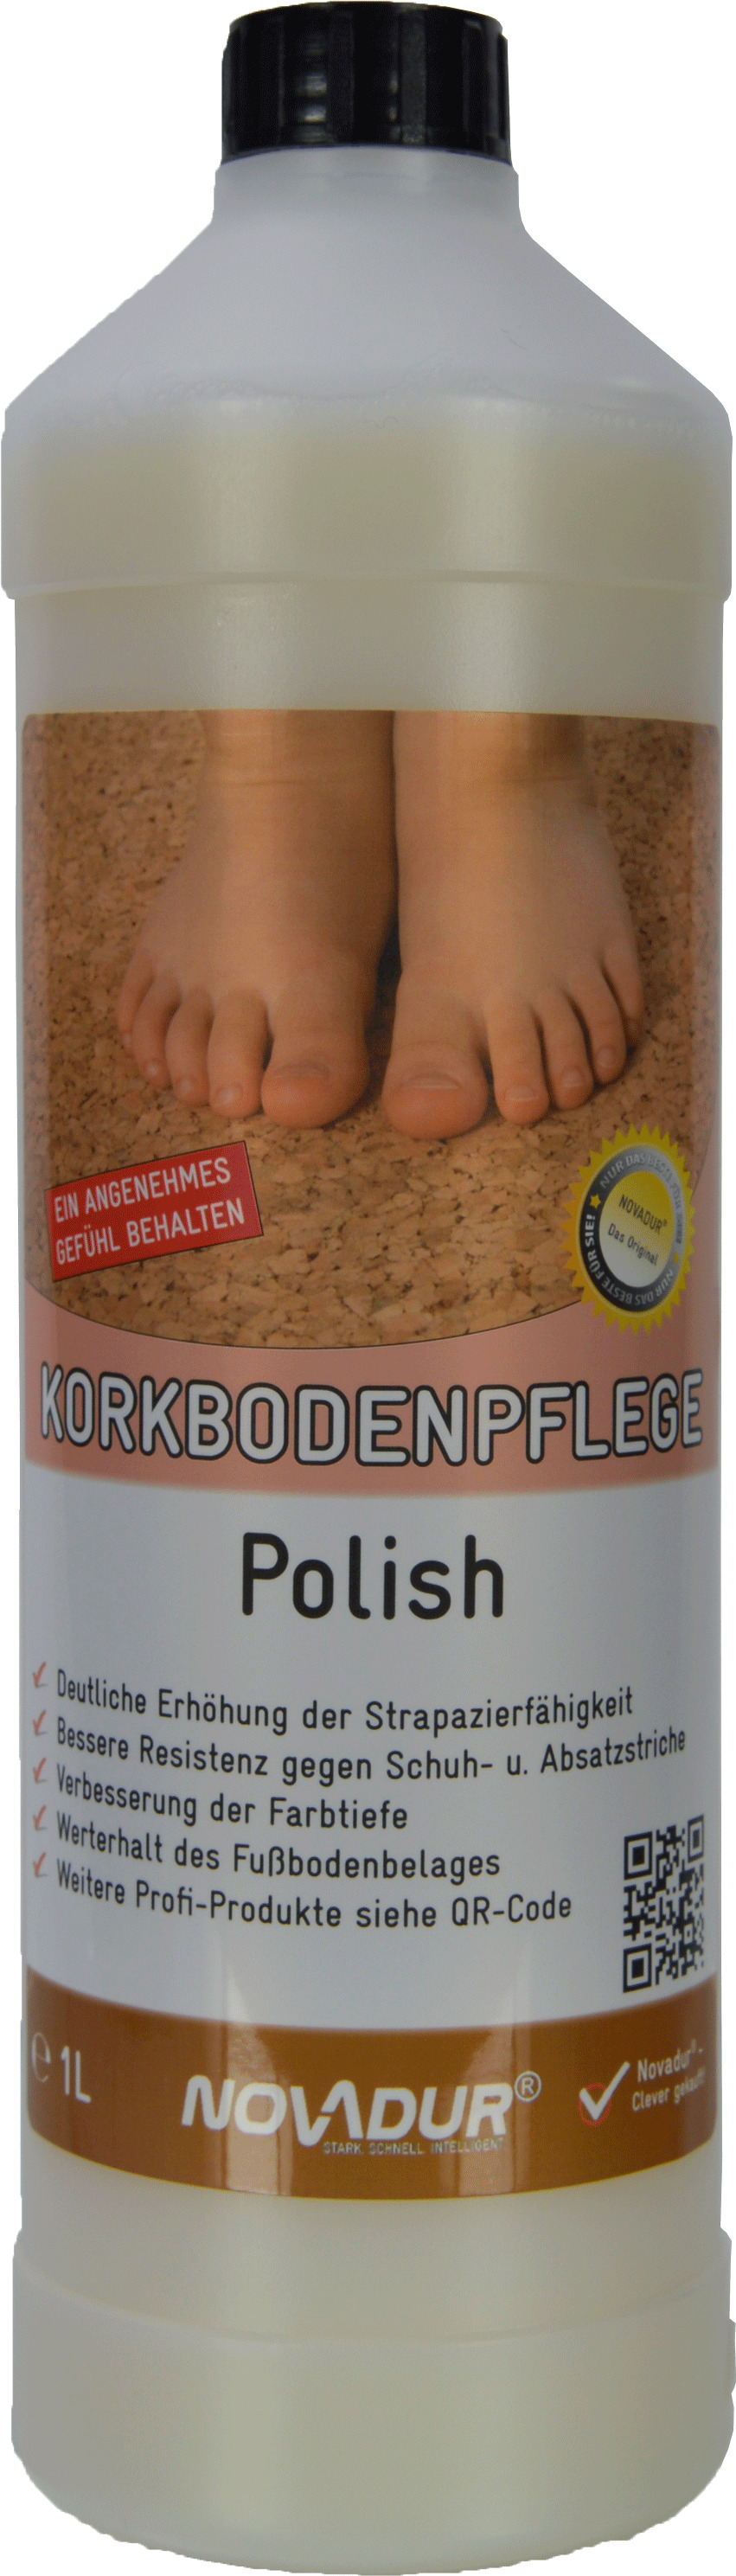 Korkbodenpflege Polish